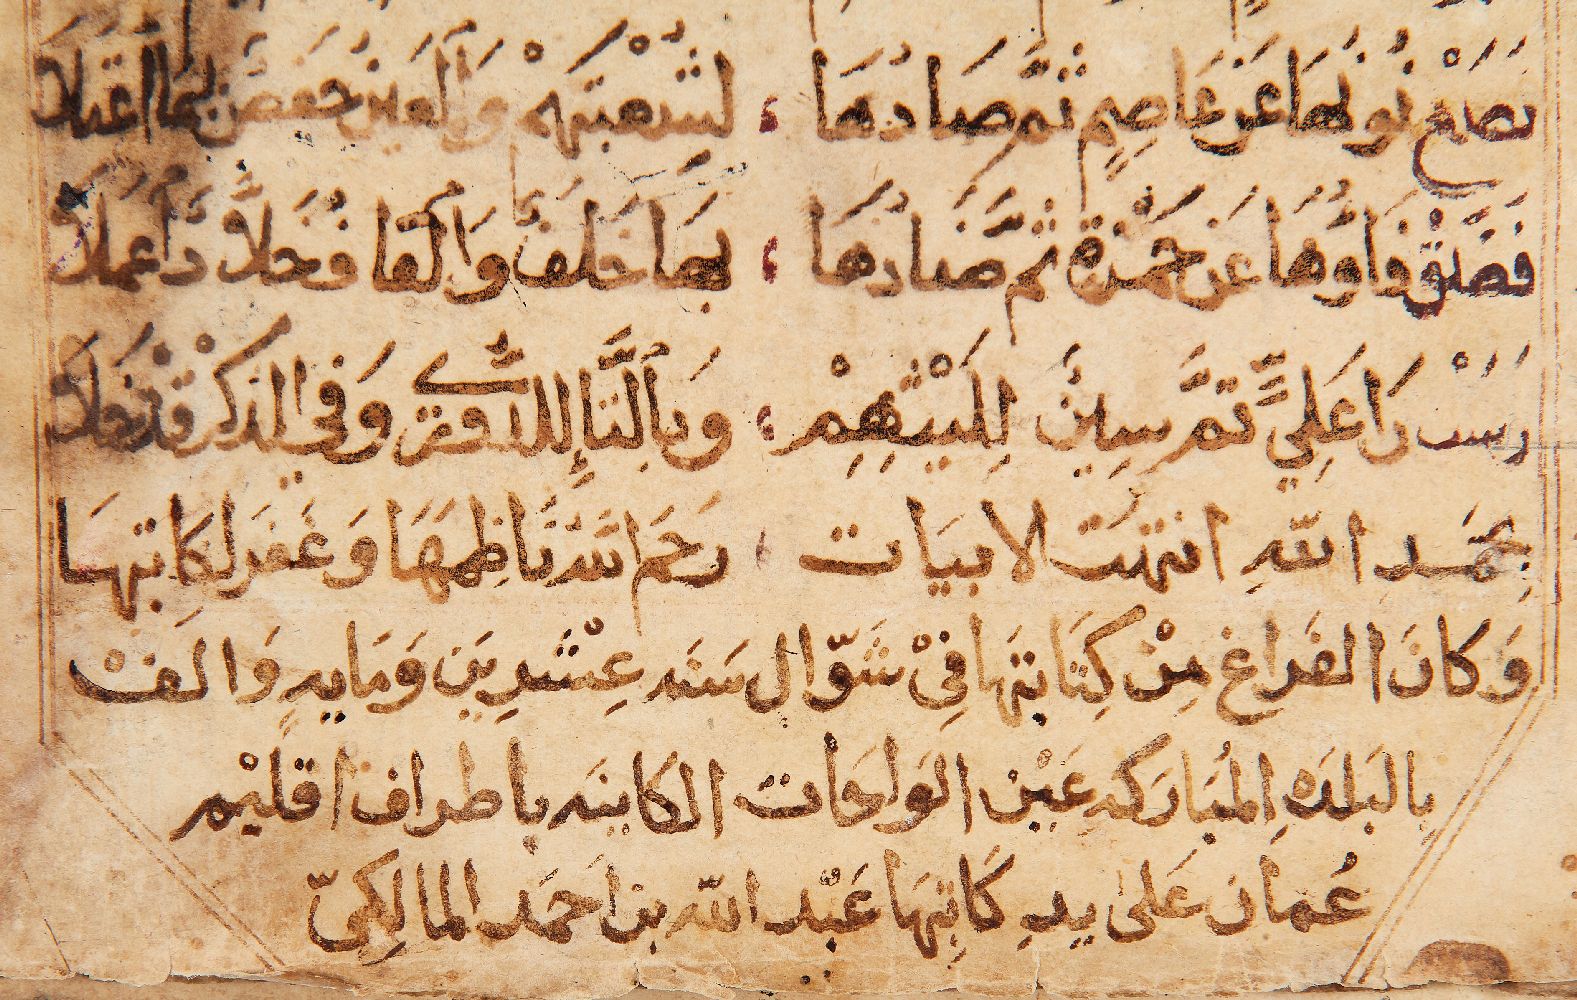 Kitab zul Ala'mani wa wajah al-Tahani (A Commentary on the Qur'an), copied by Abdullah bin Ahmed - Image 3 of 4